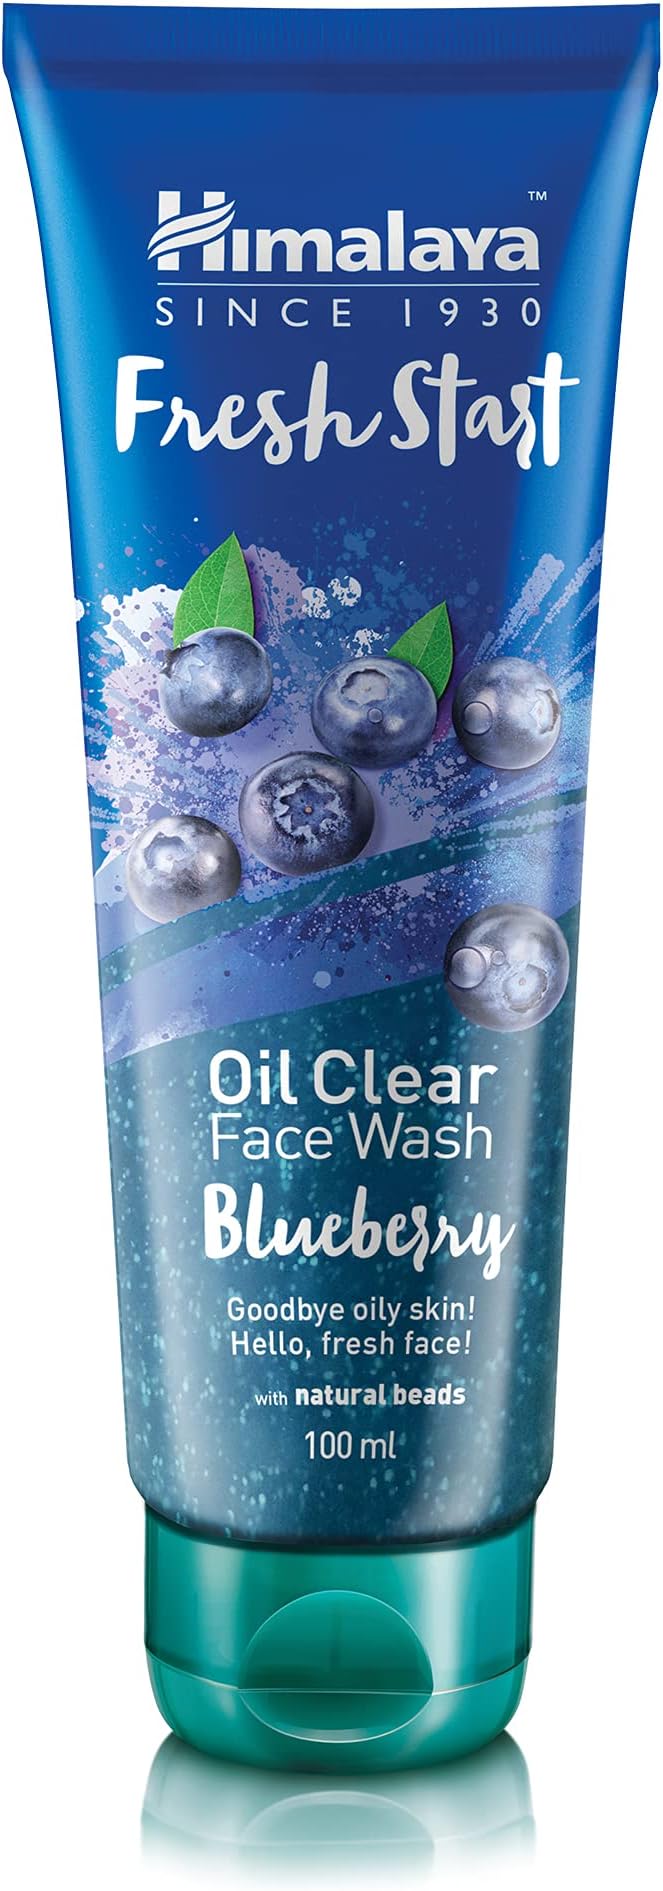 Himalaya Fresh Start Oil Clear Face Wash, Blueberry - 100 ml